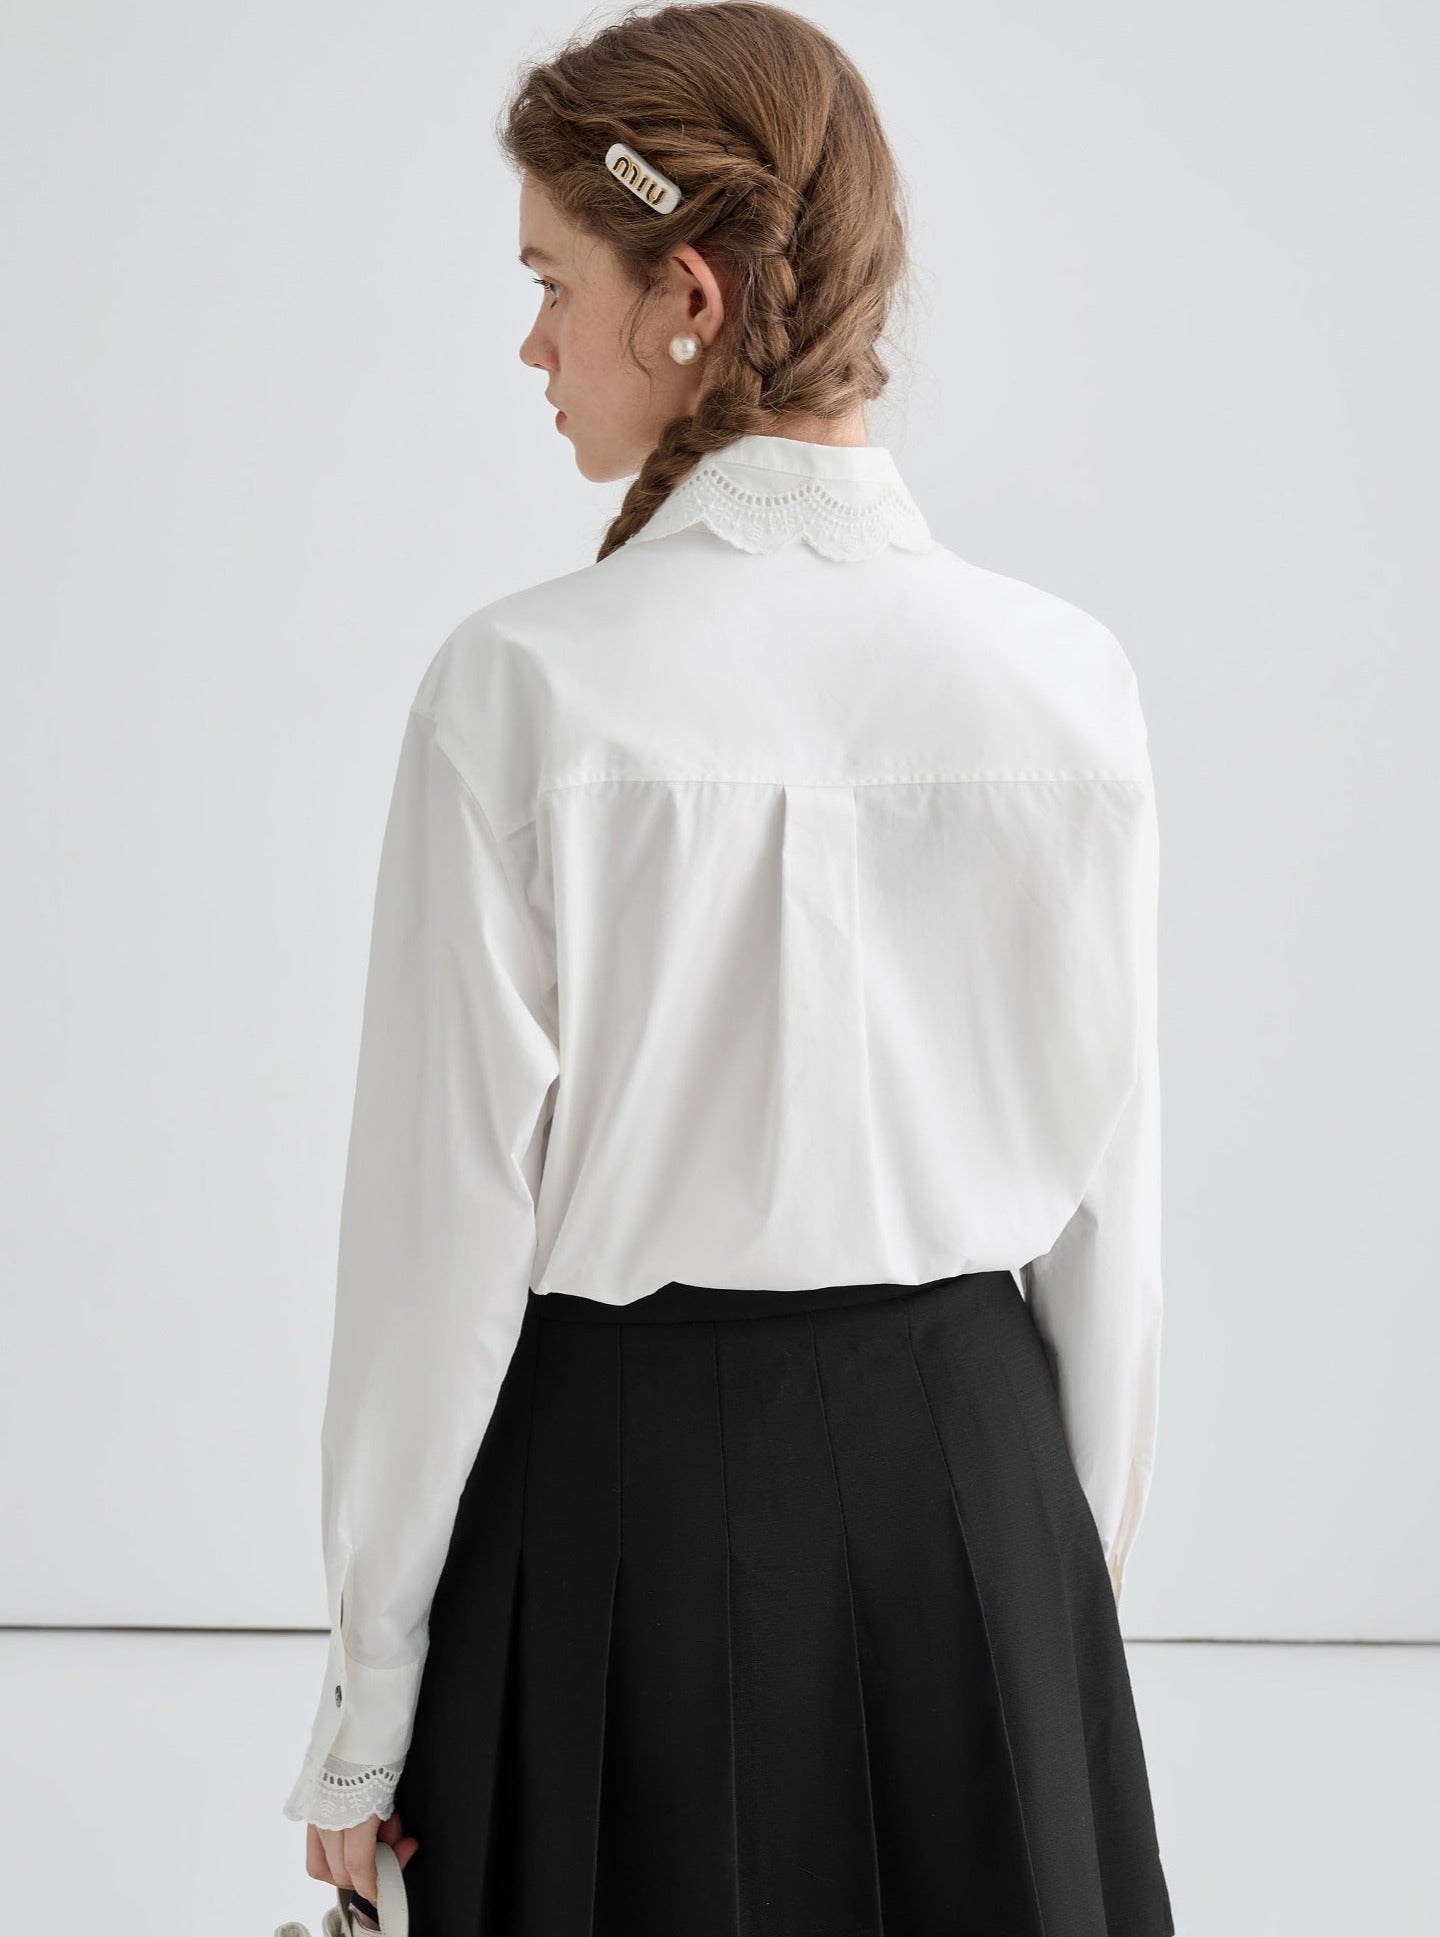 White Lace Long-Sleeved Shirt